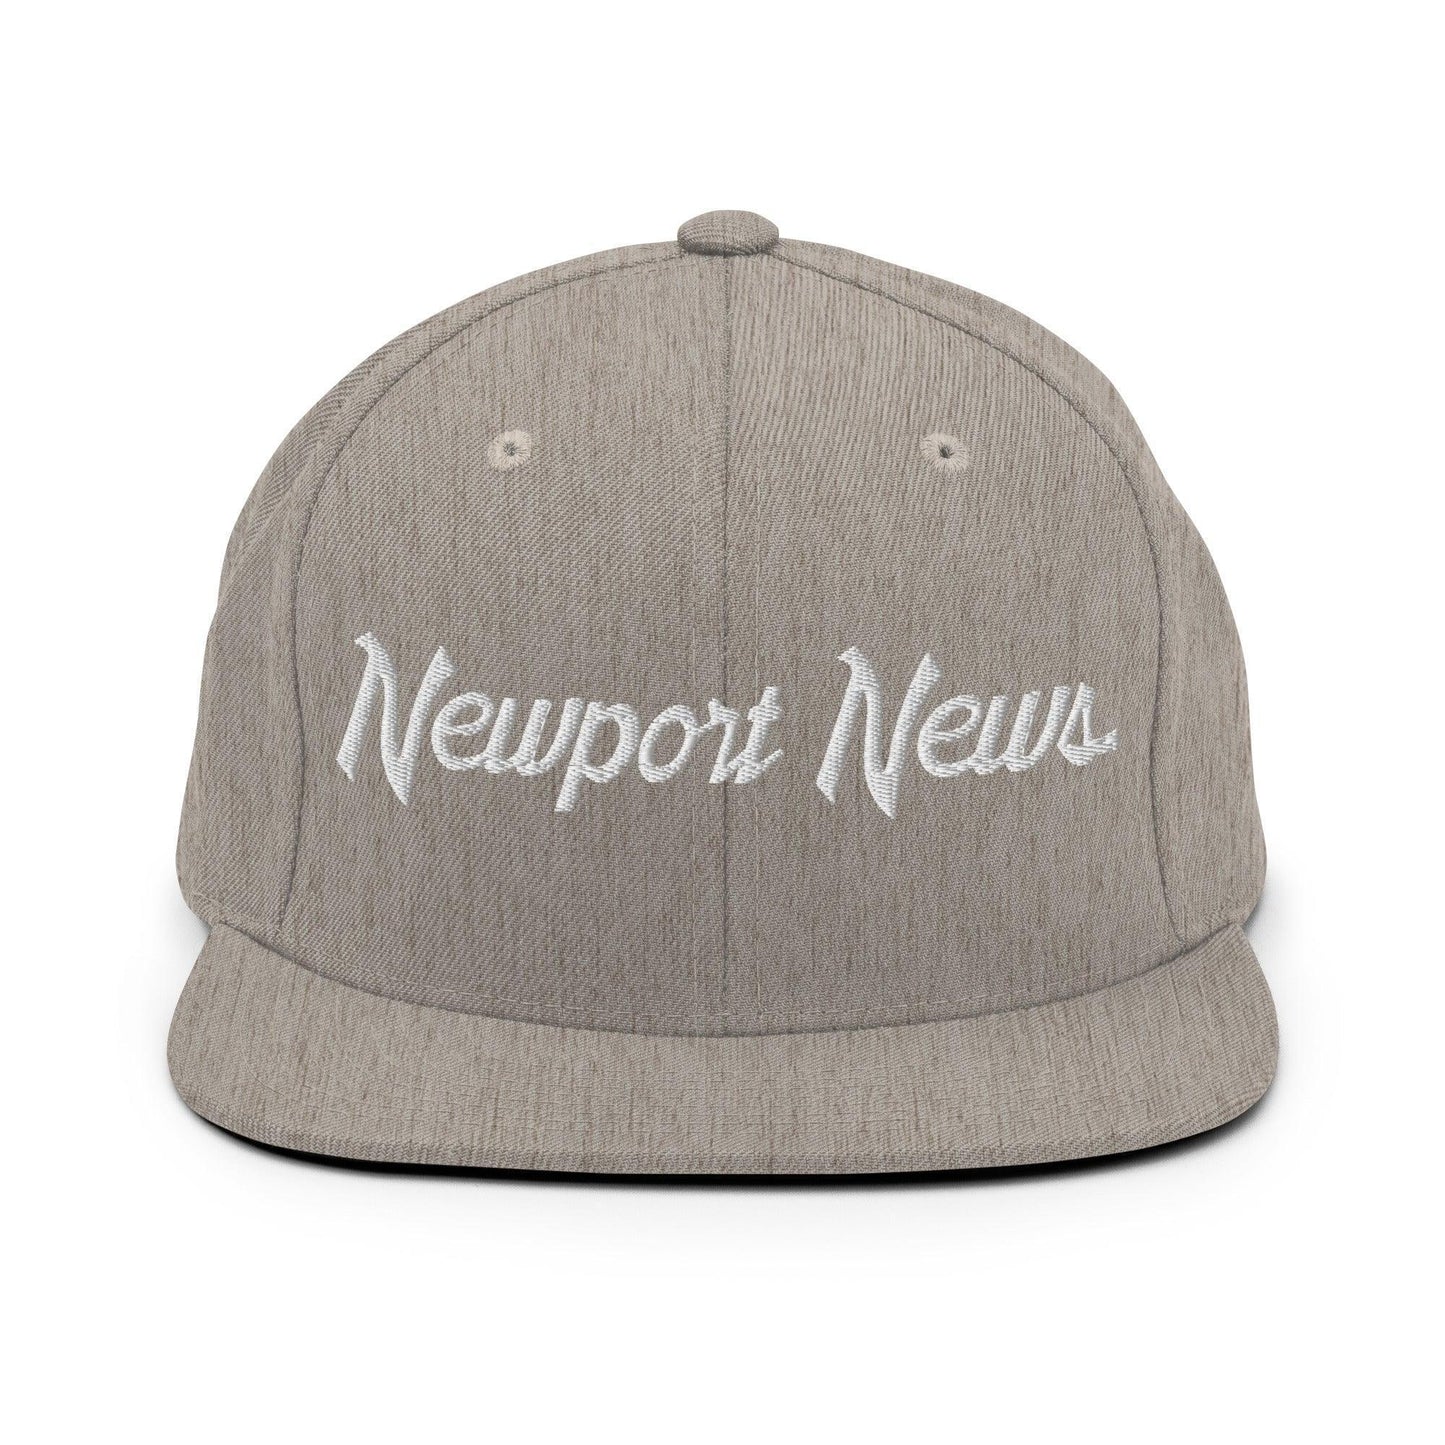 Newport News Script Snapback Hat Heather Grey